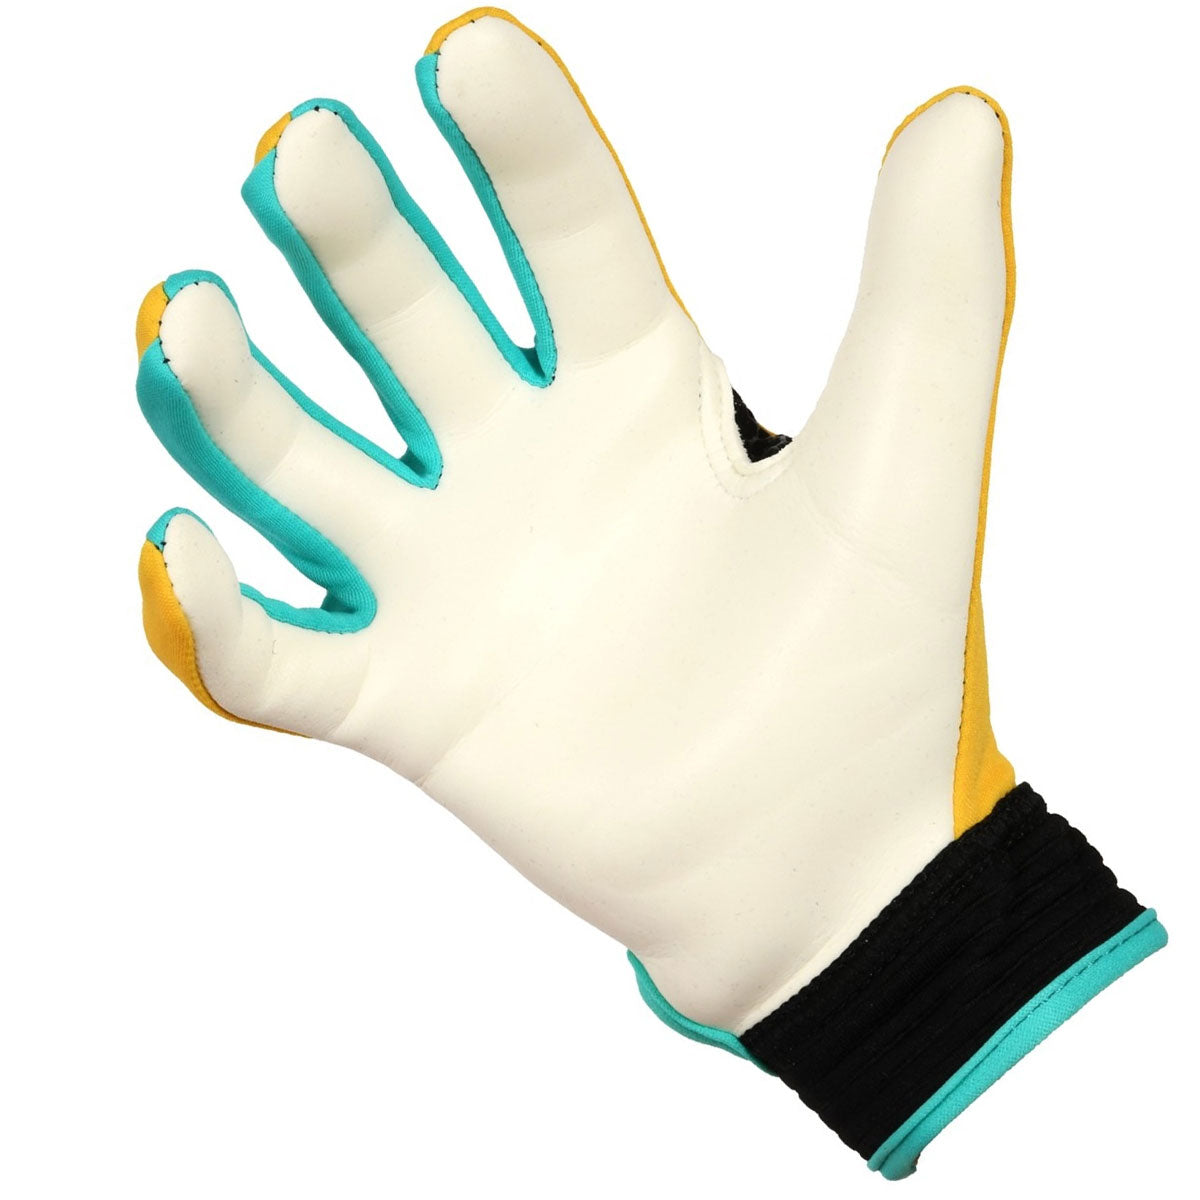 Atak Air Gaelic Gloves - Adult - Yellow/Blue/Black